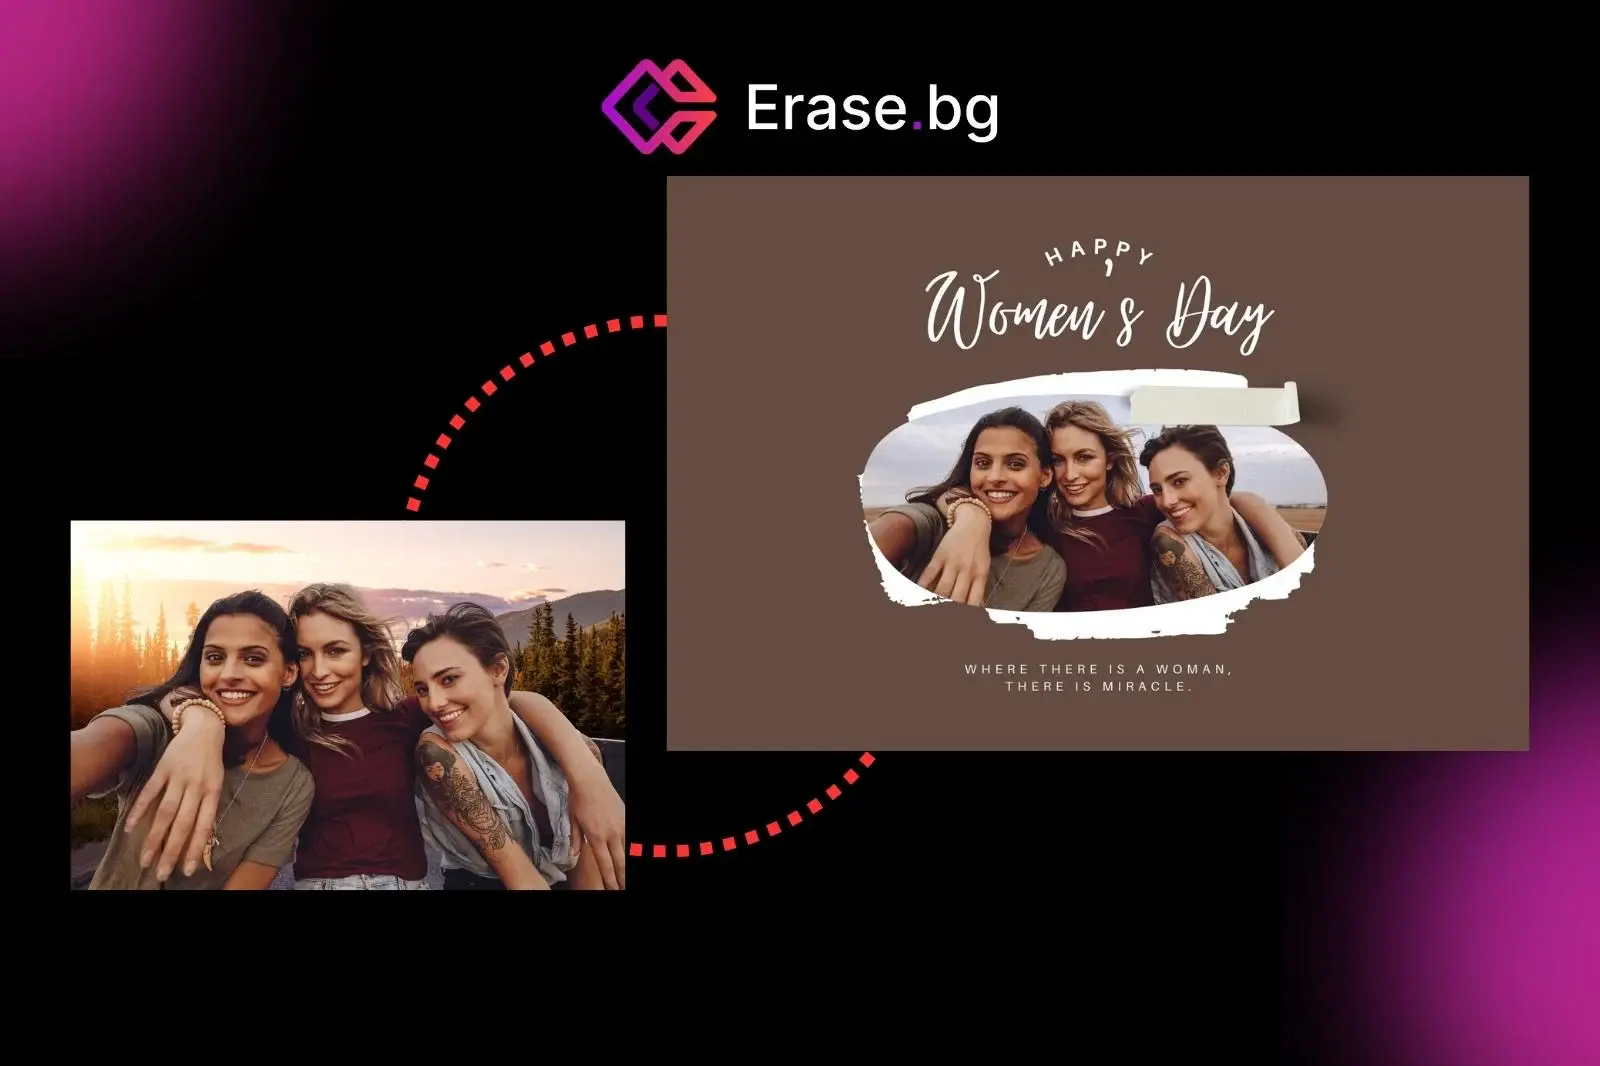 Using Erase.bg to create social media posts for Women’s Day